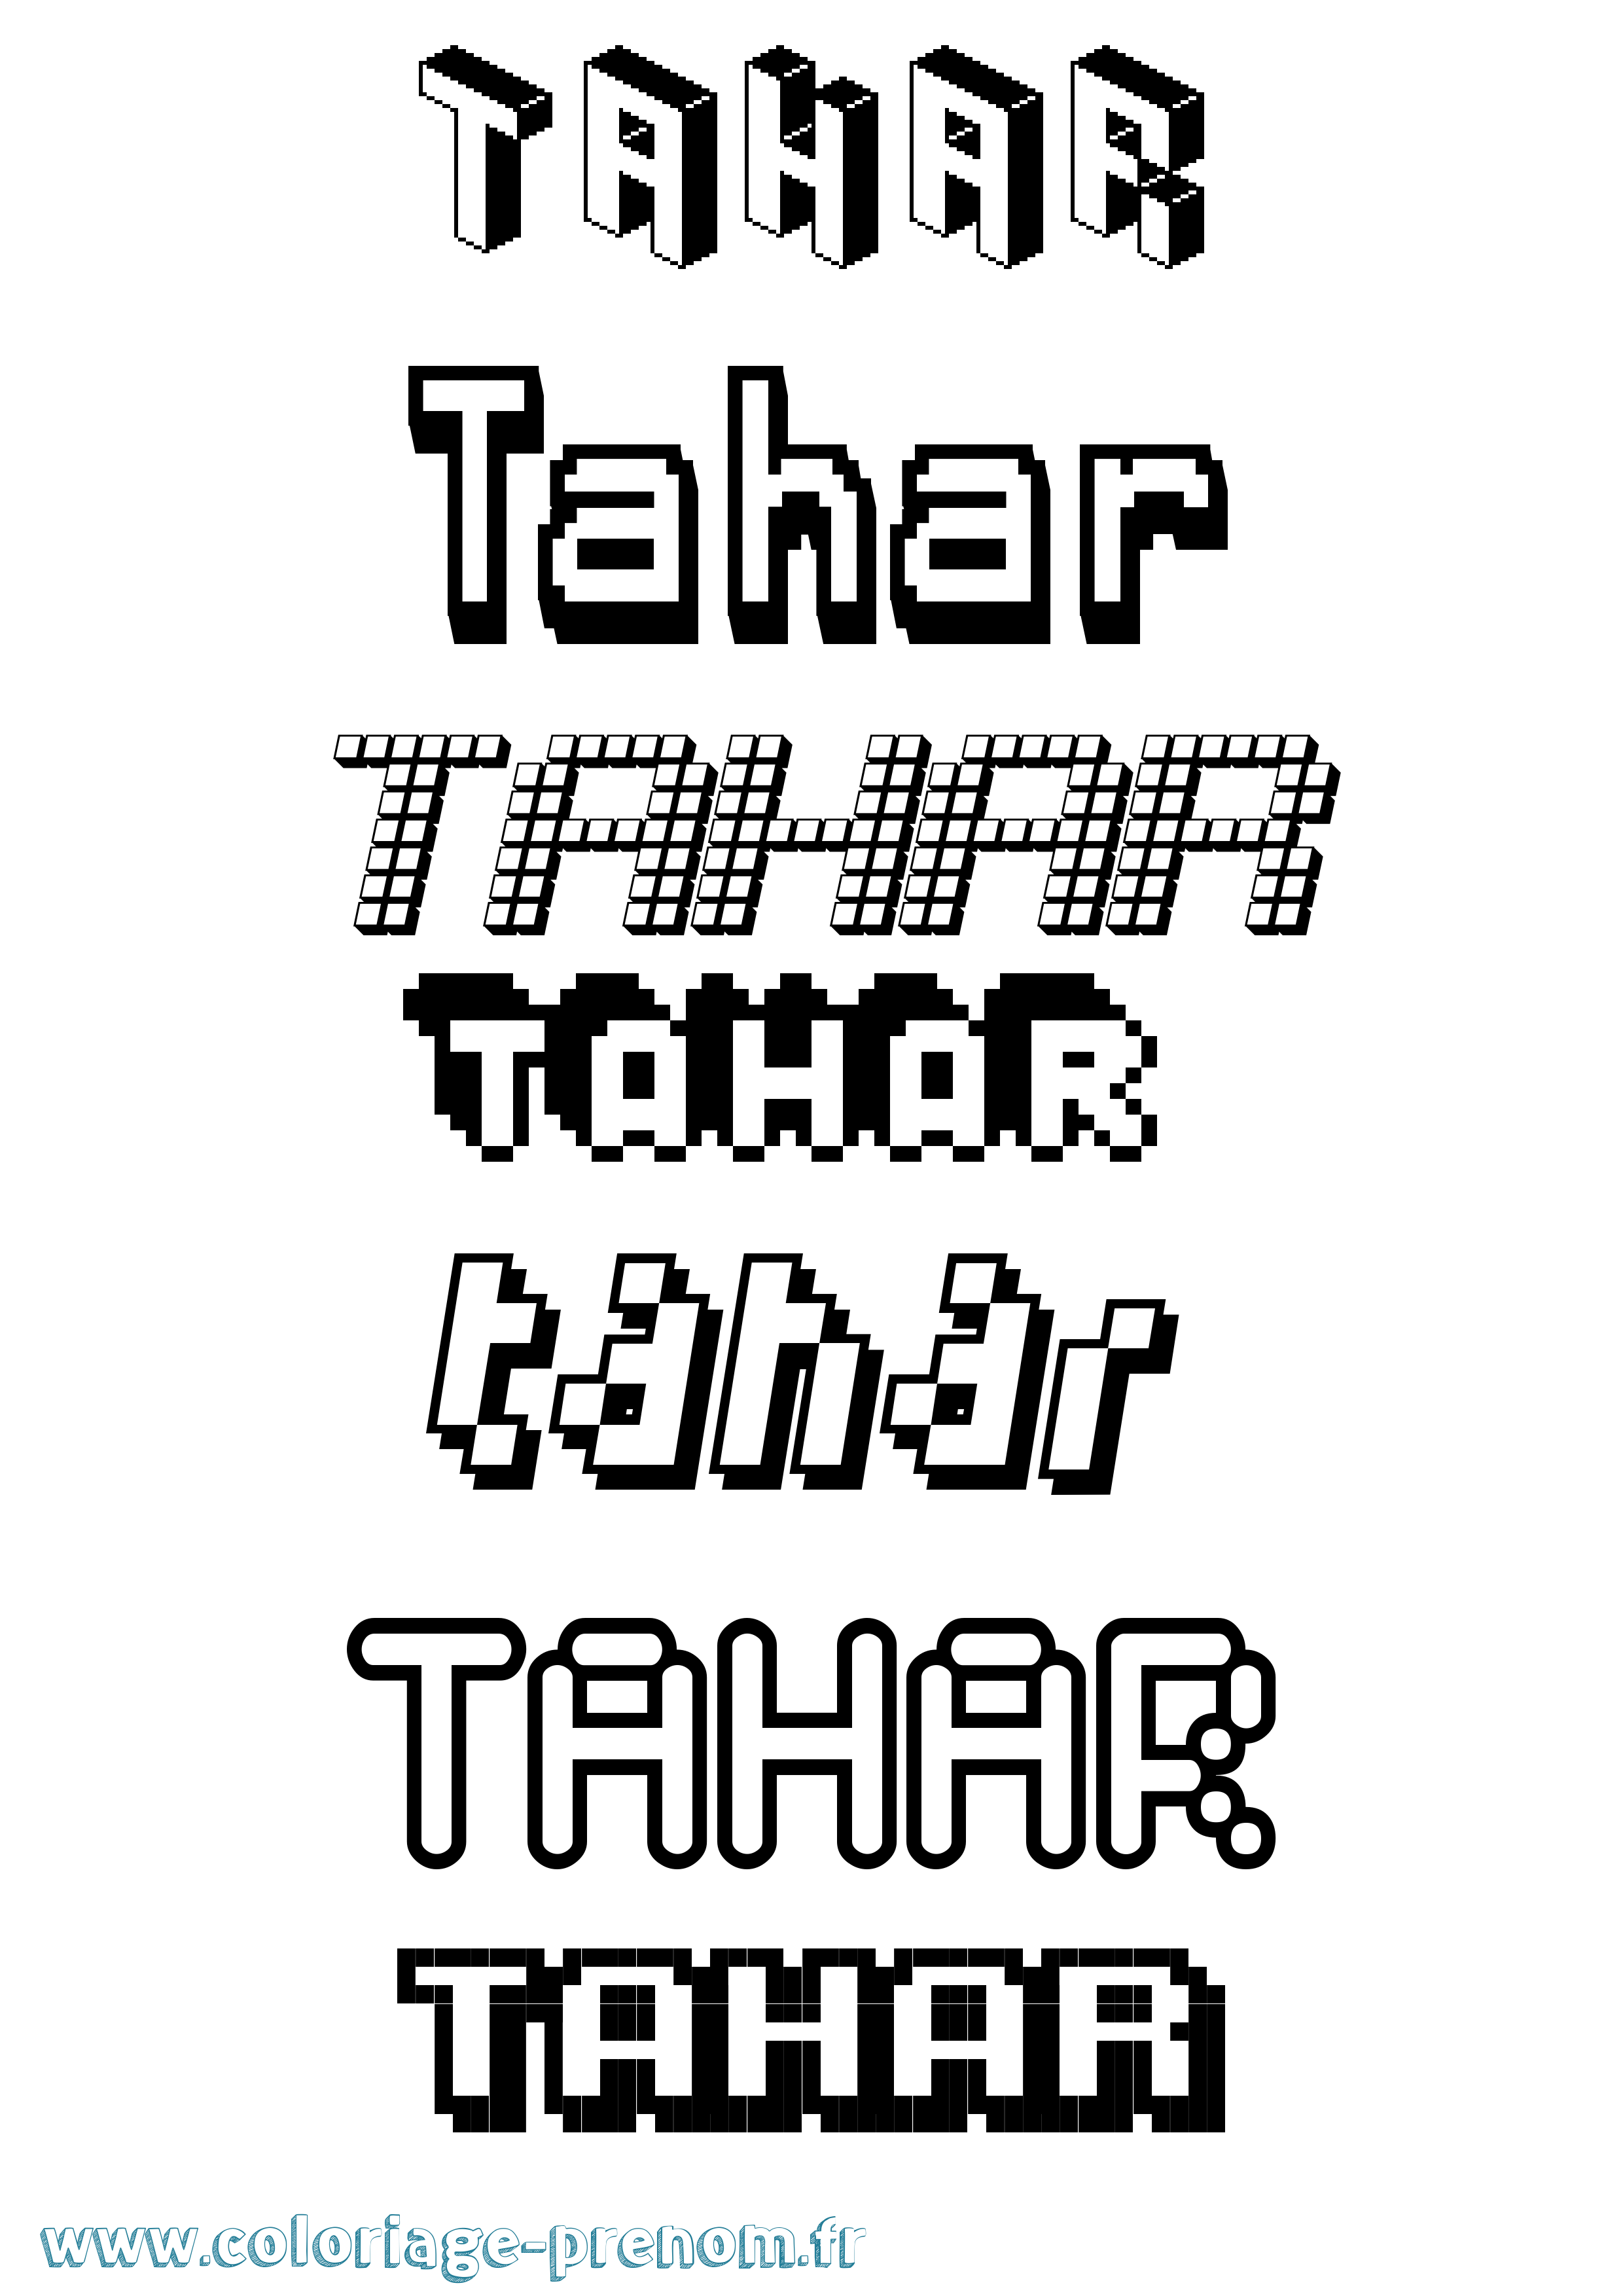 Coloriage prénom Tahar Pixel